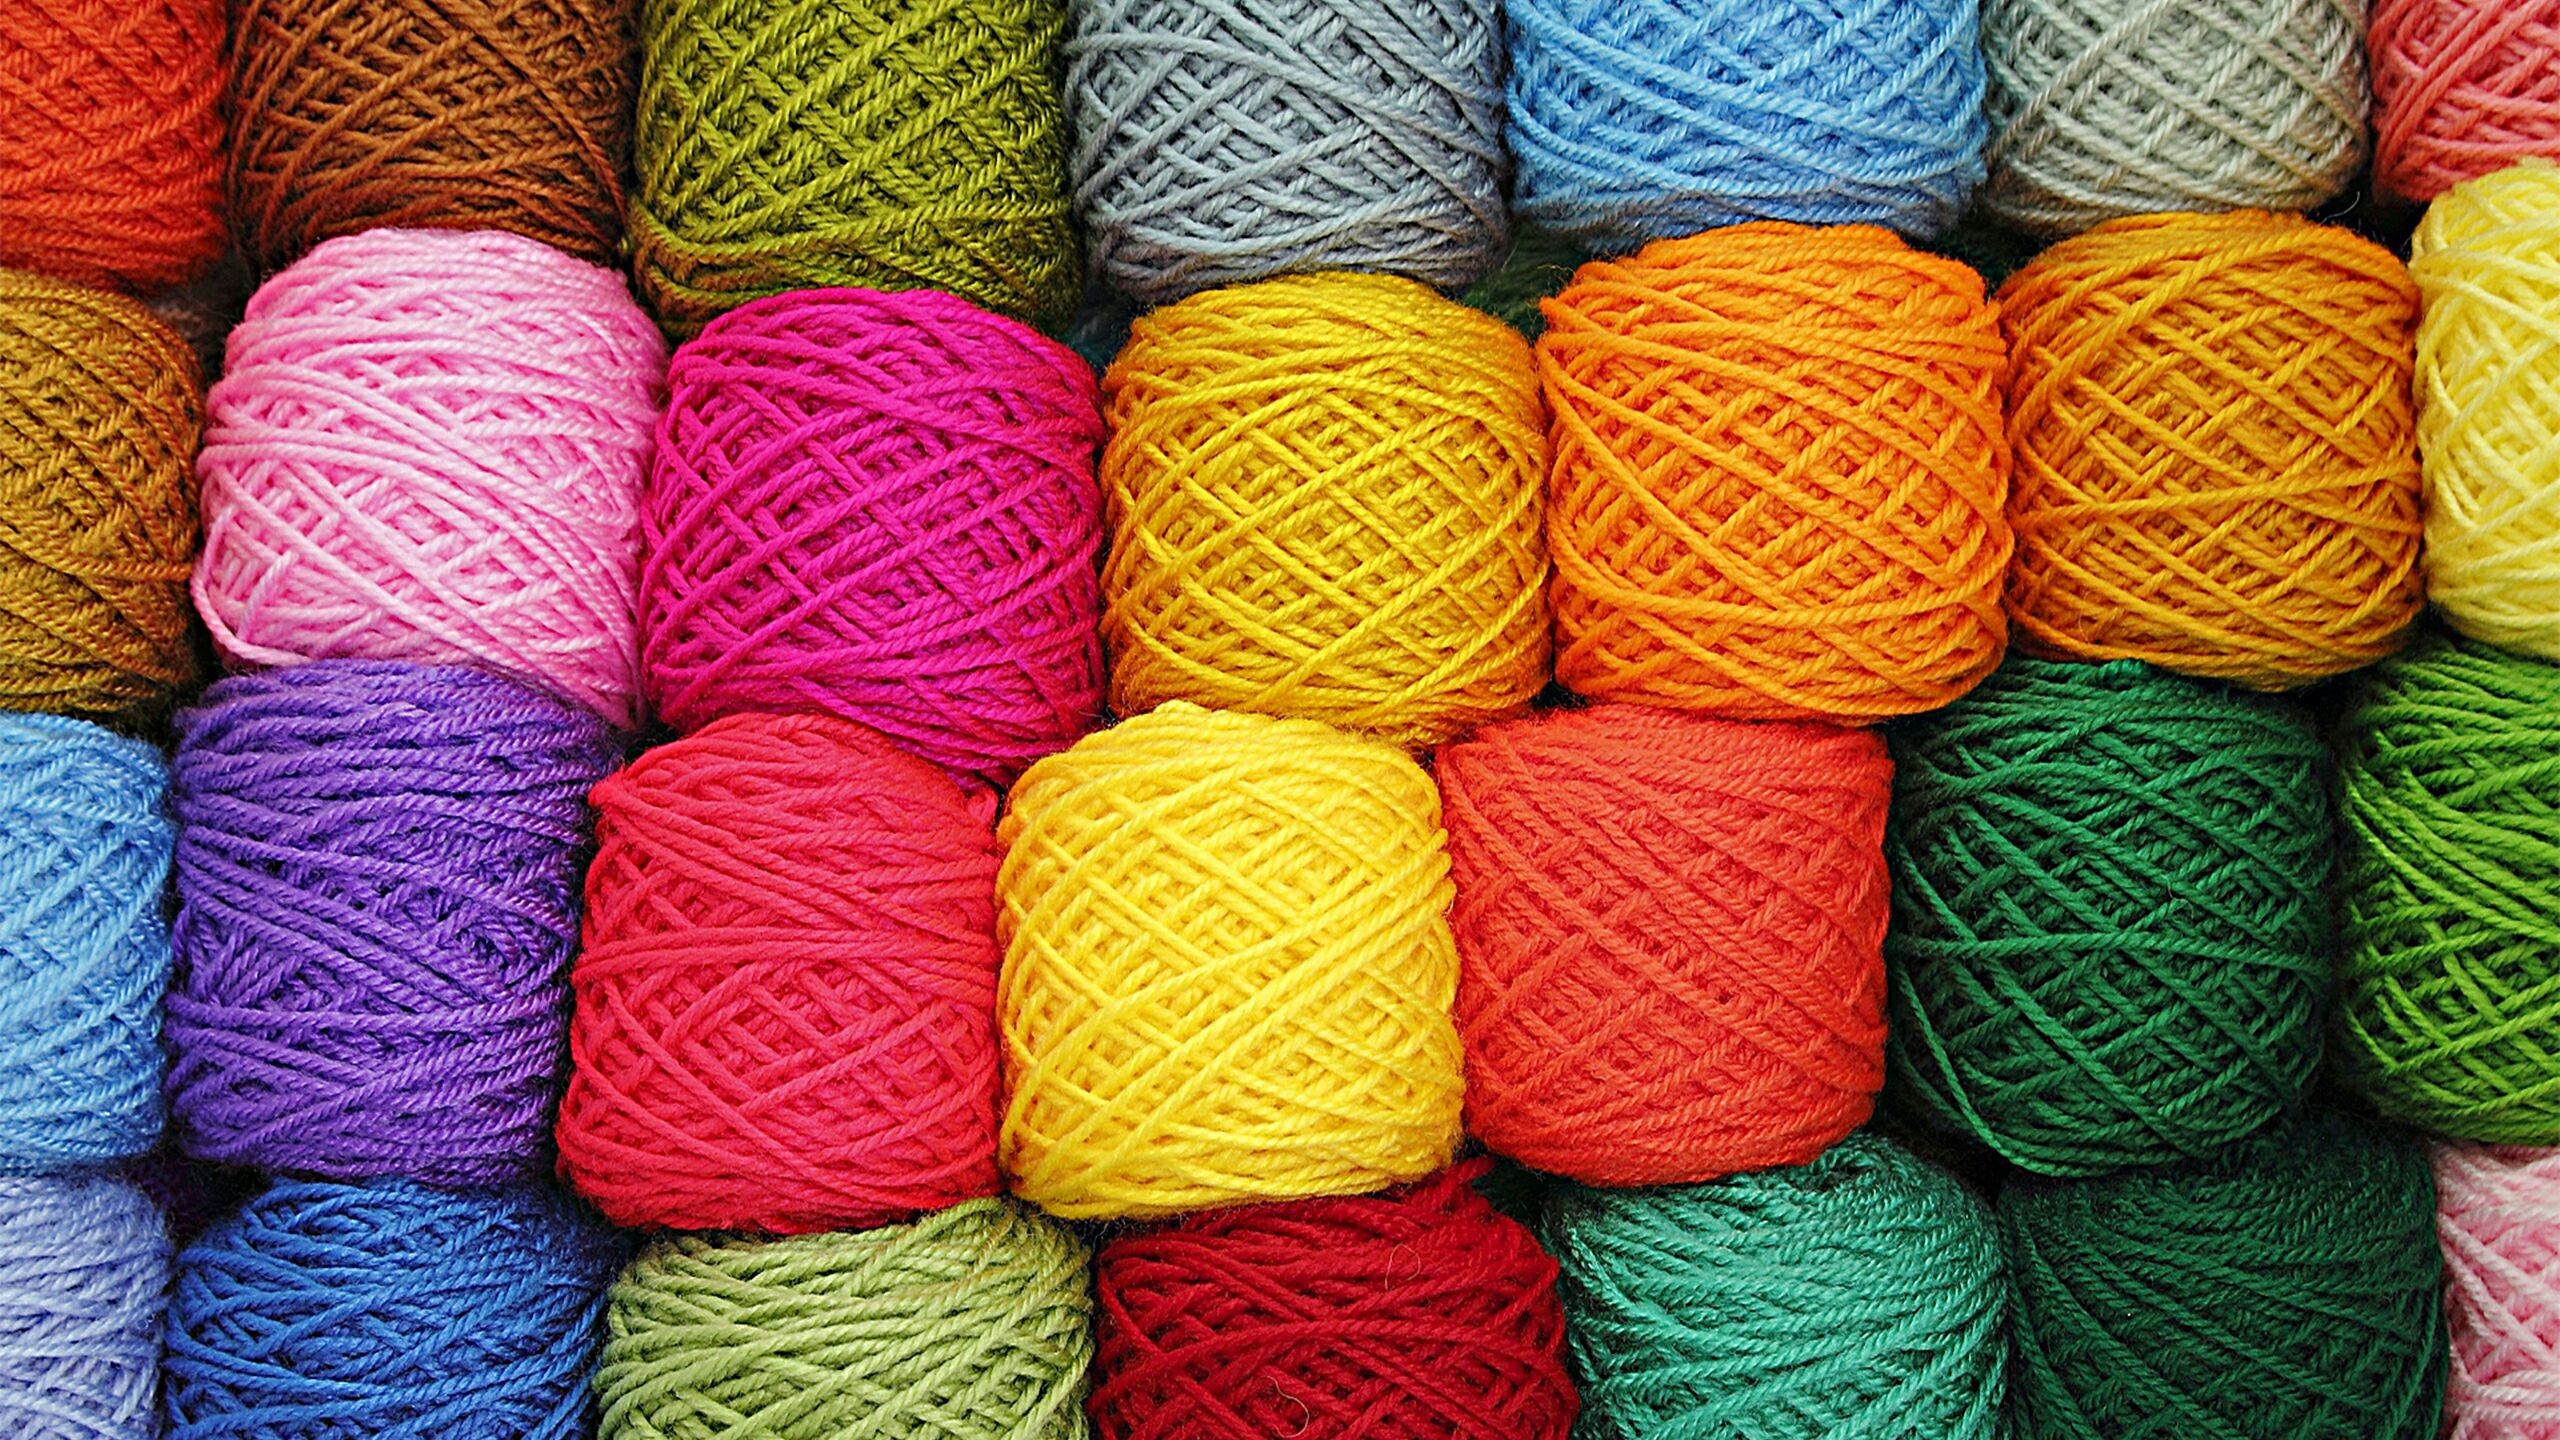 Wool Colorful Yarn 2560x1440